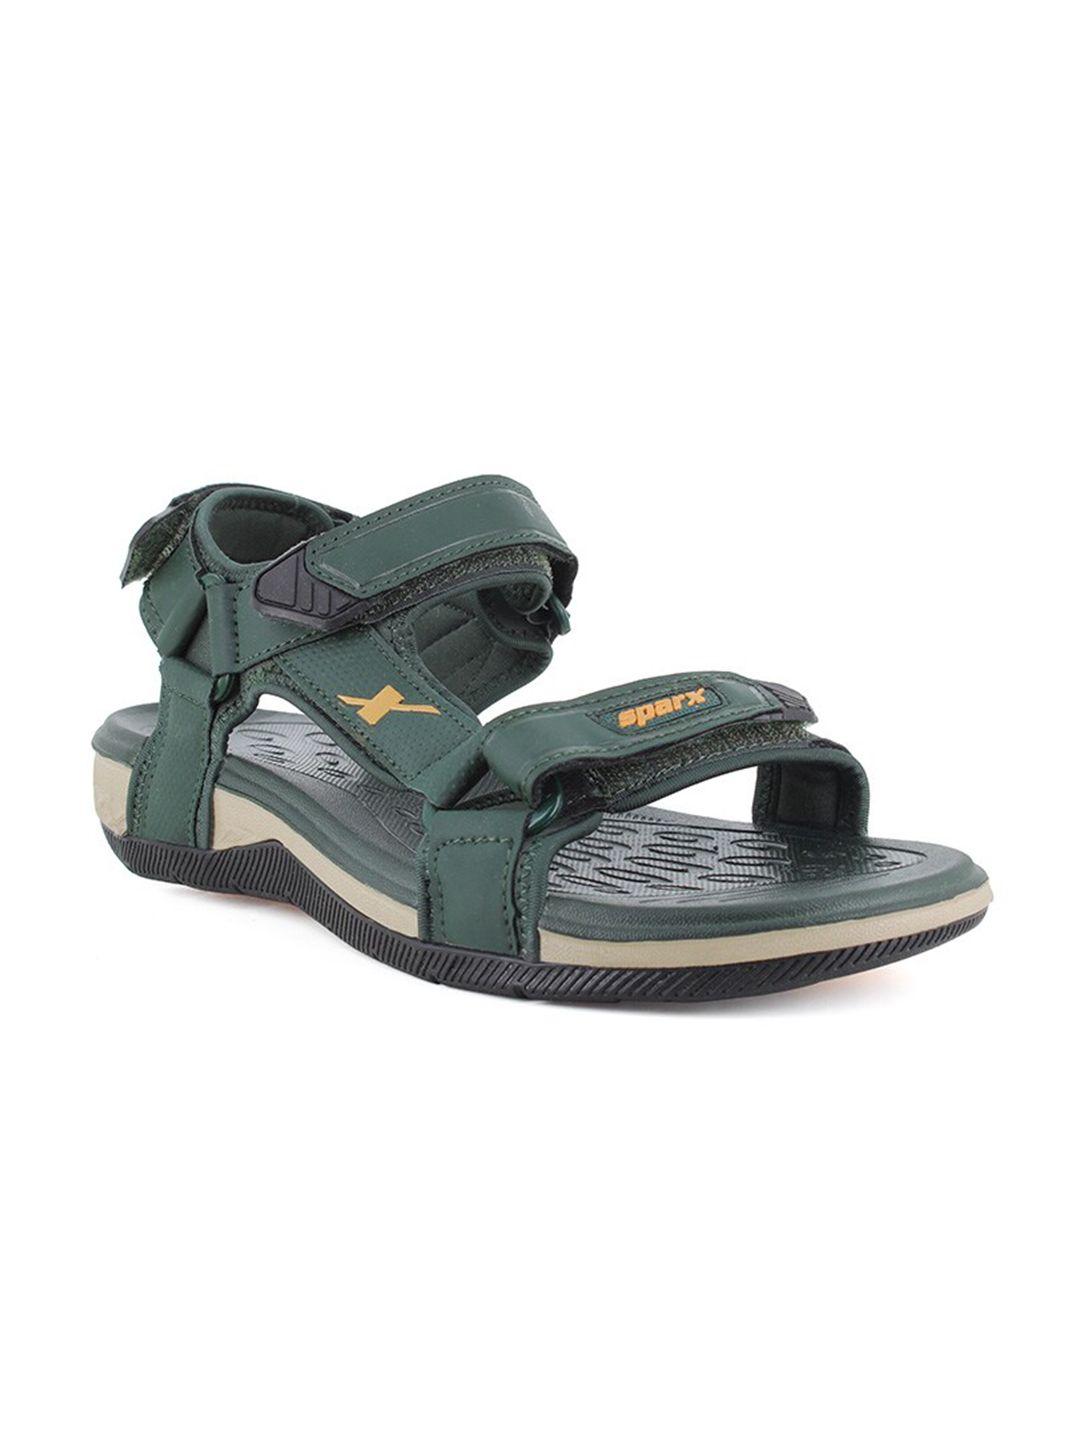 sparx-mens-ss-573-sport-sandals